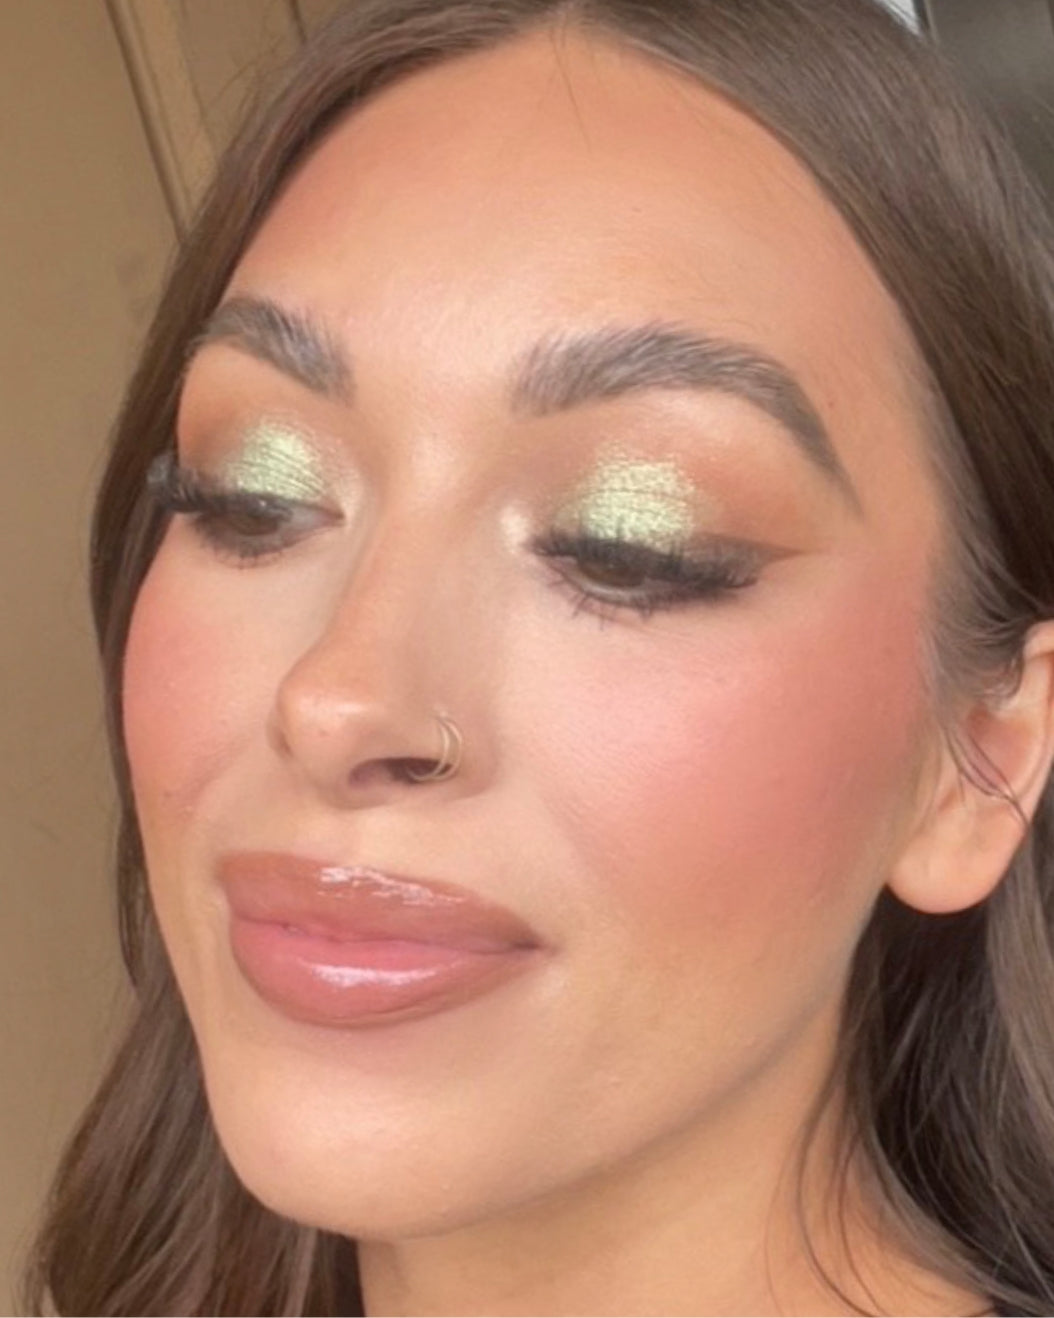 Makeup Artist wears a matcha latte-inspired makeup look with light green shimmer eyeshadow.